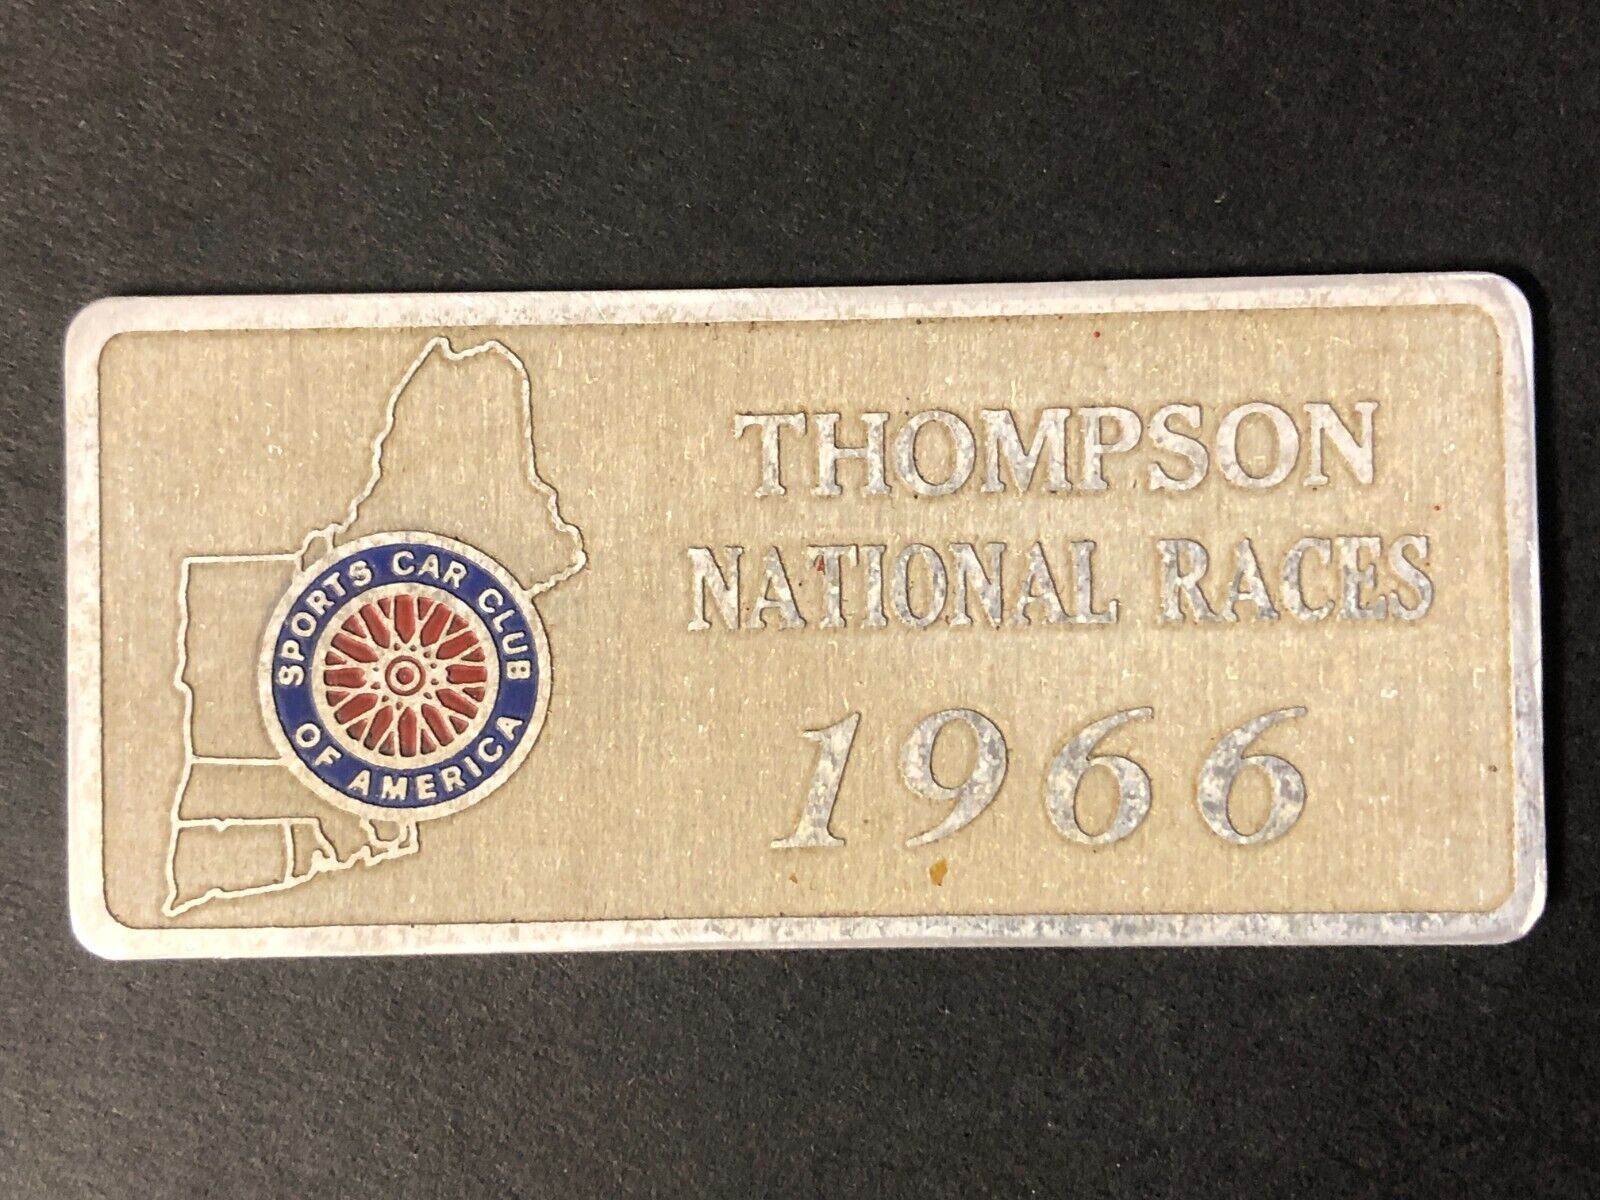 SCCA (New England Region) 1966 Thompson National Races Alum. Wall Plaque